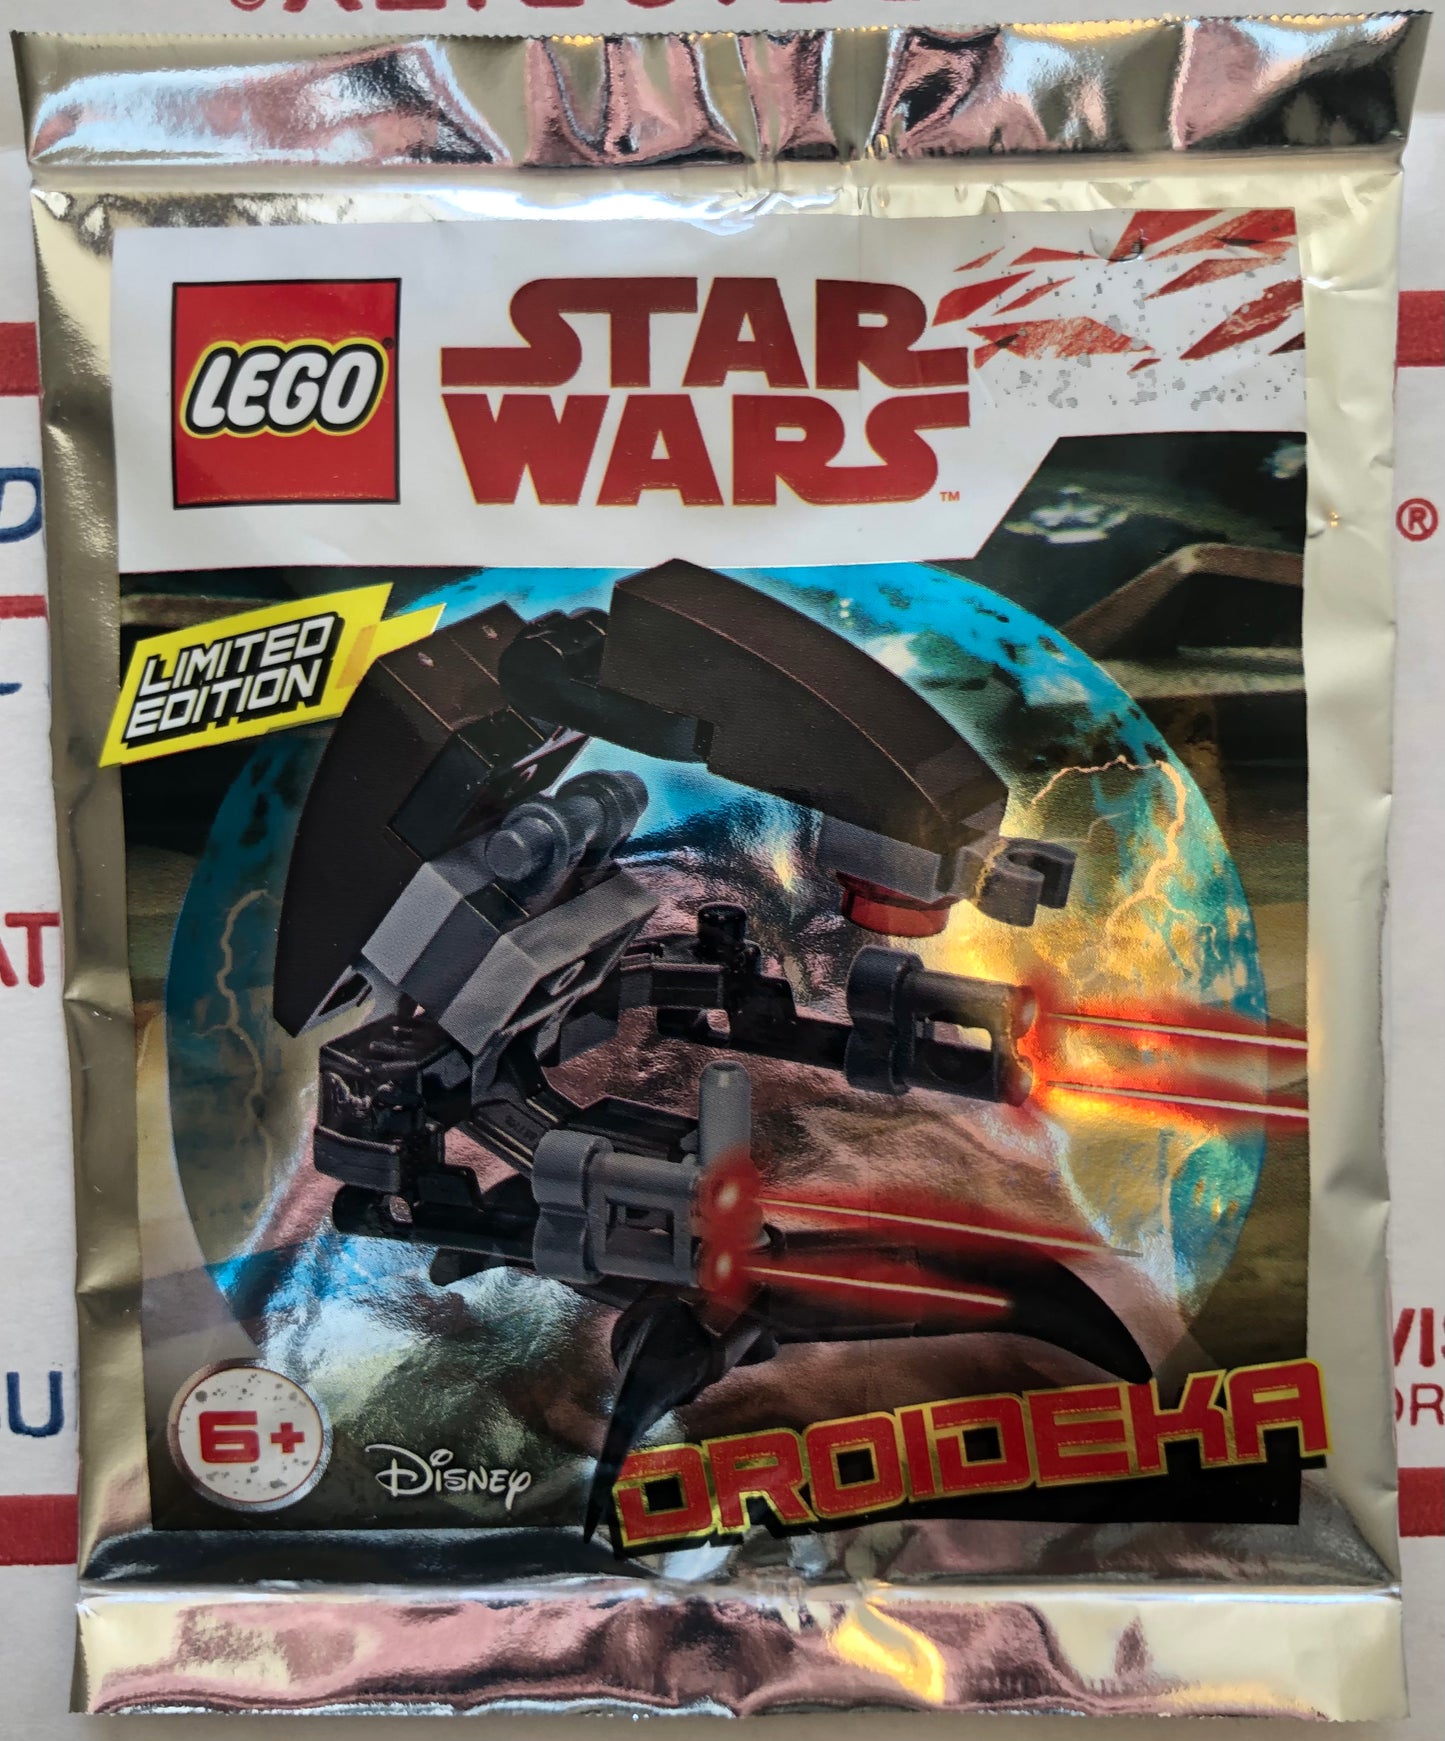 LEGO Star Wars Limited Edition Probe Droideka Minifigure Foil Pack Bag Build Set 911840